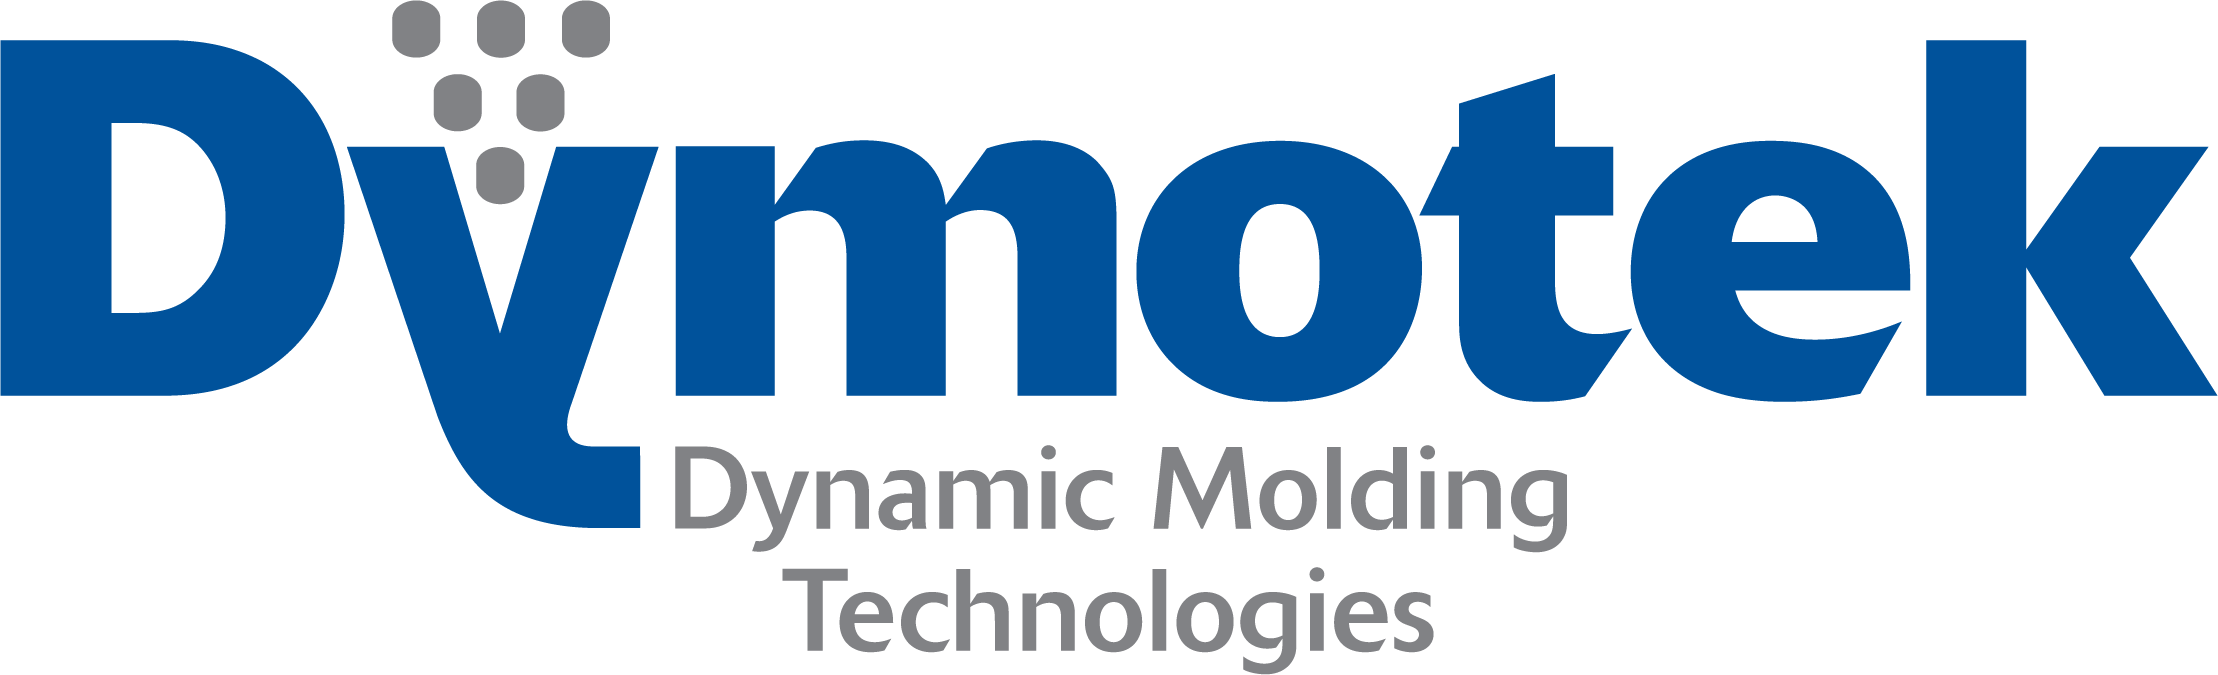 Dymotek Corporation logo